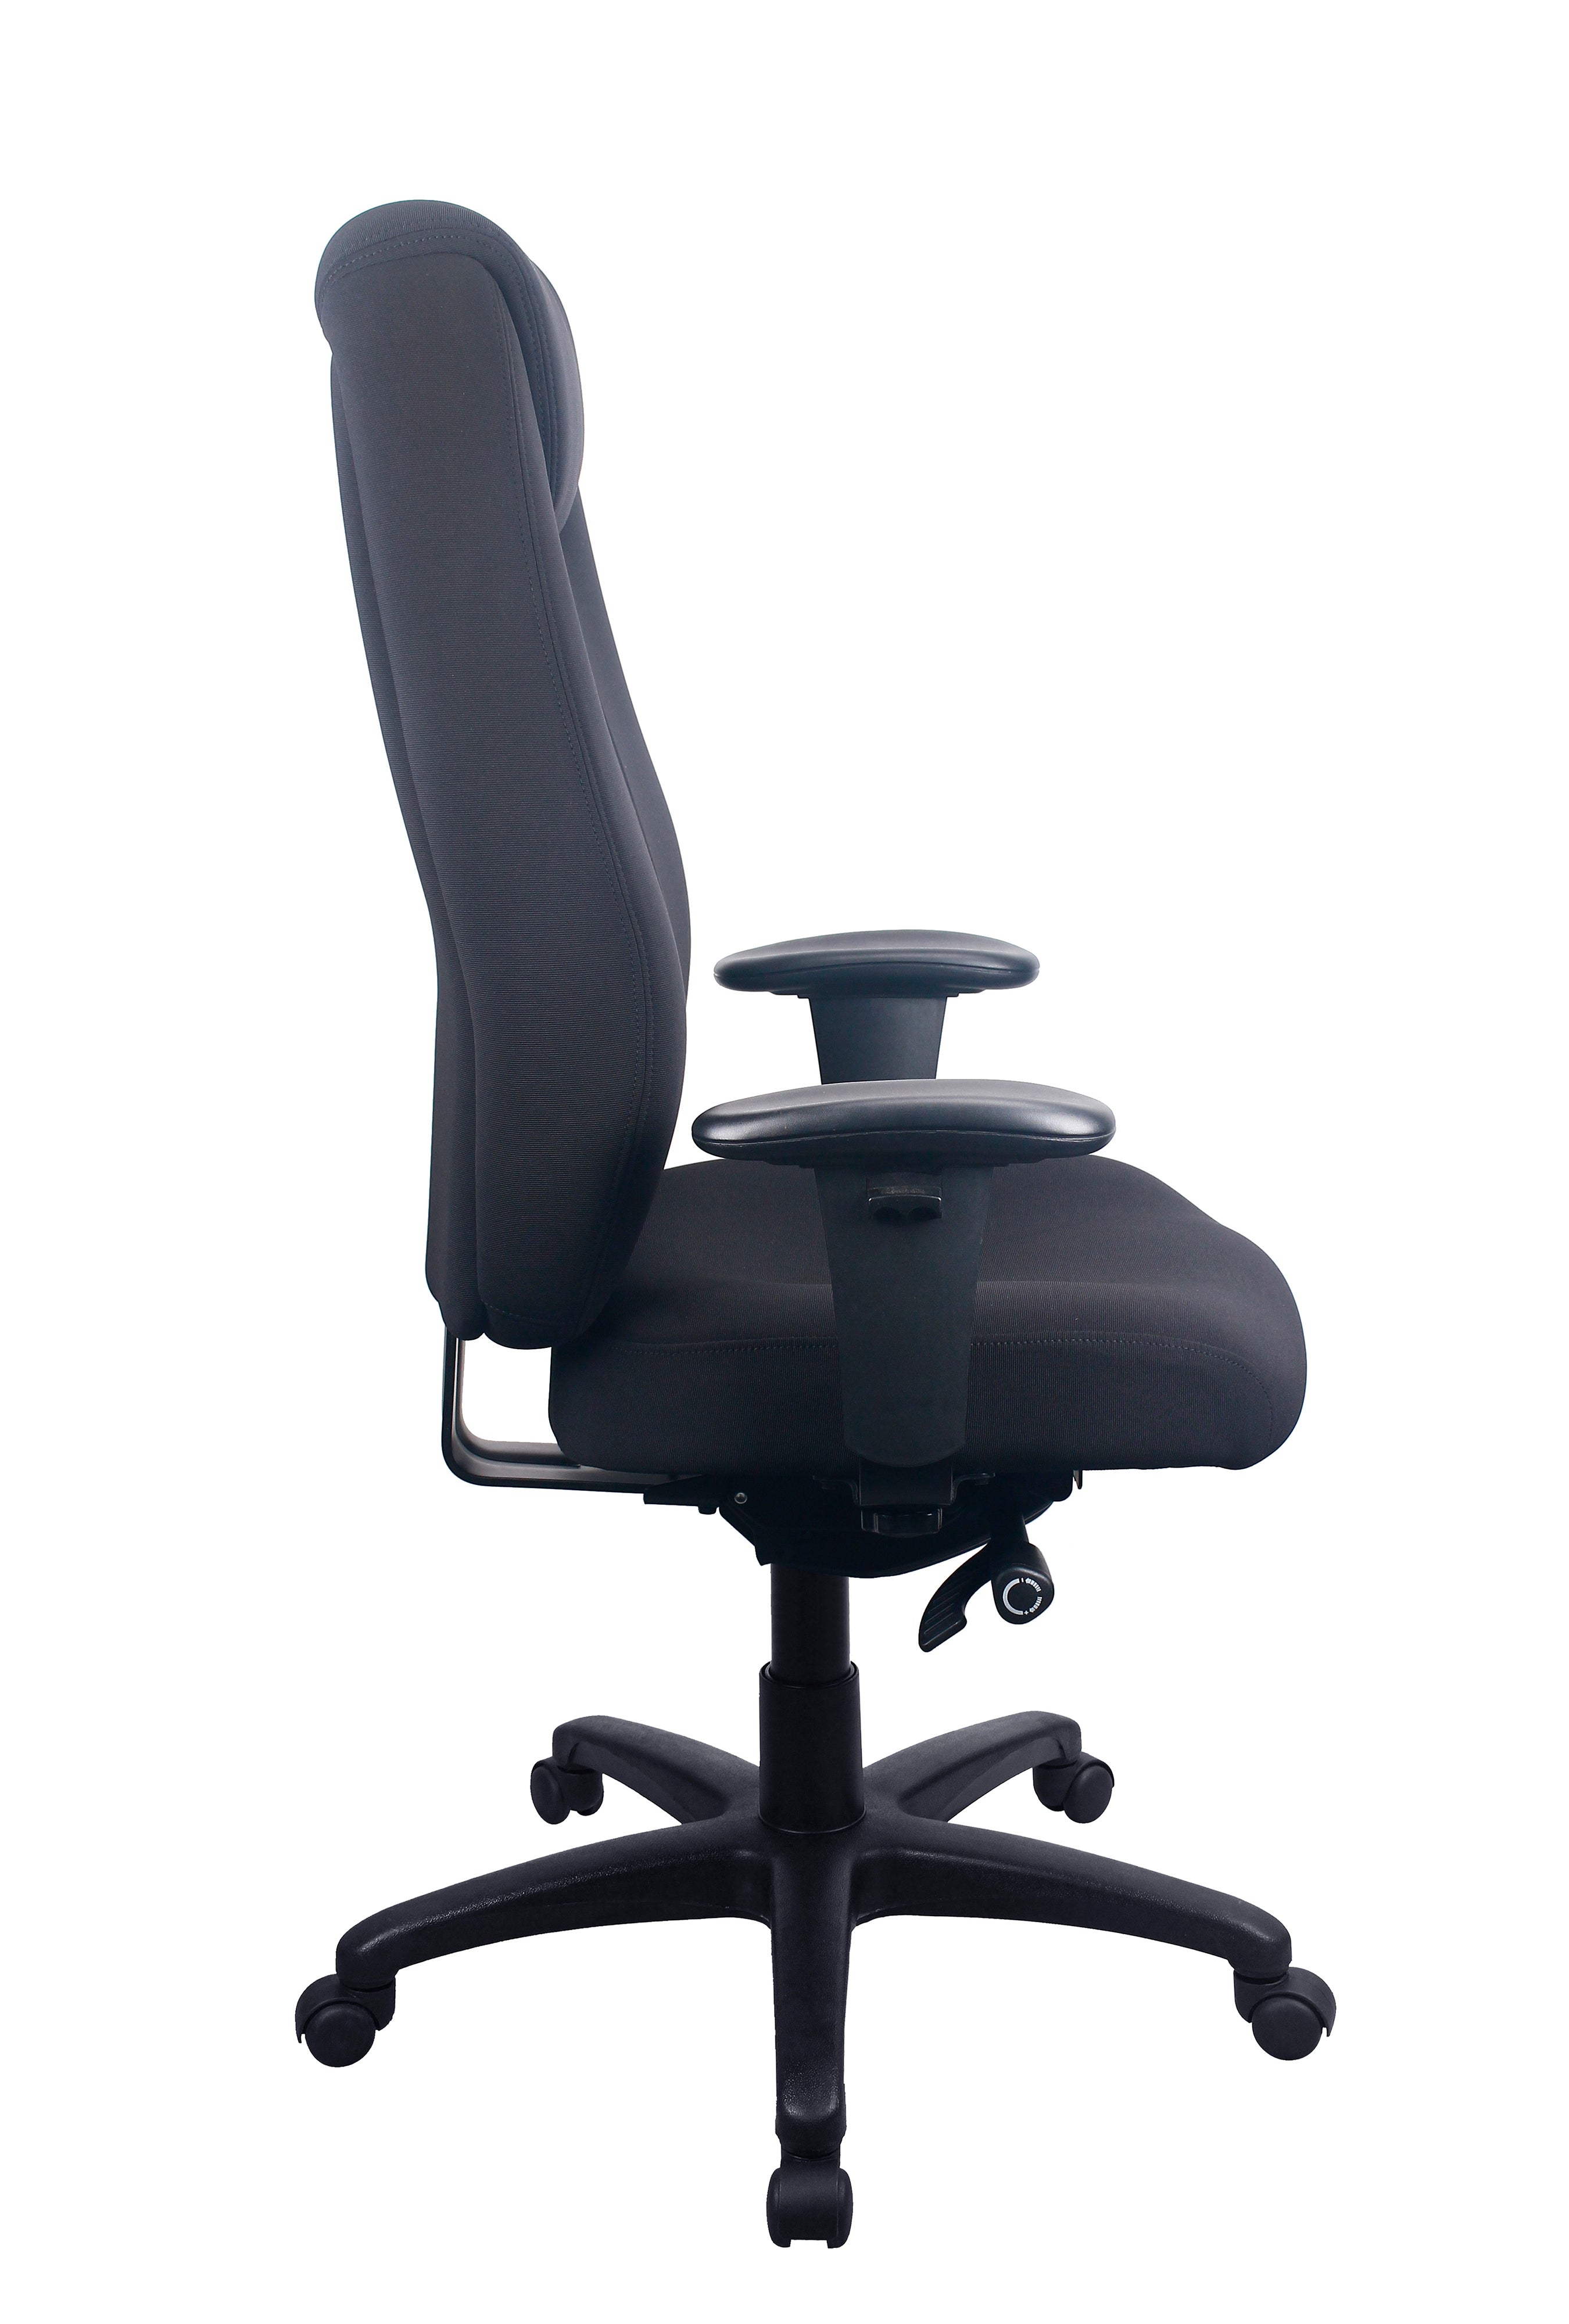 TEMPUR®-6400 Lumbar Support™ Chair: Where Design Meets Relaxation